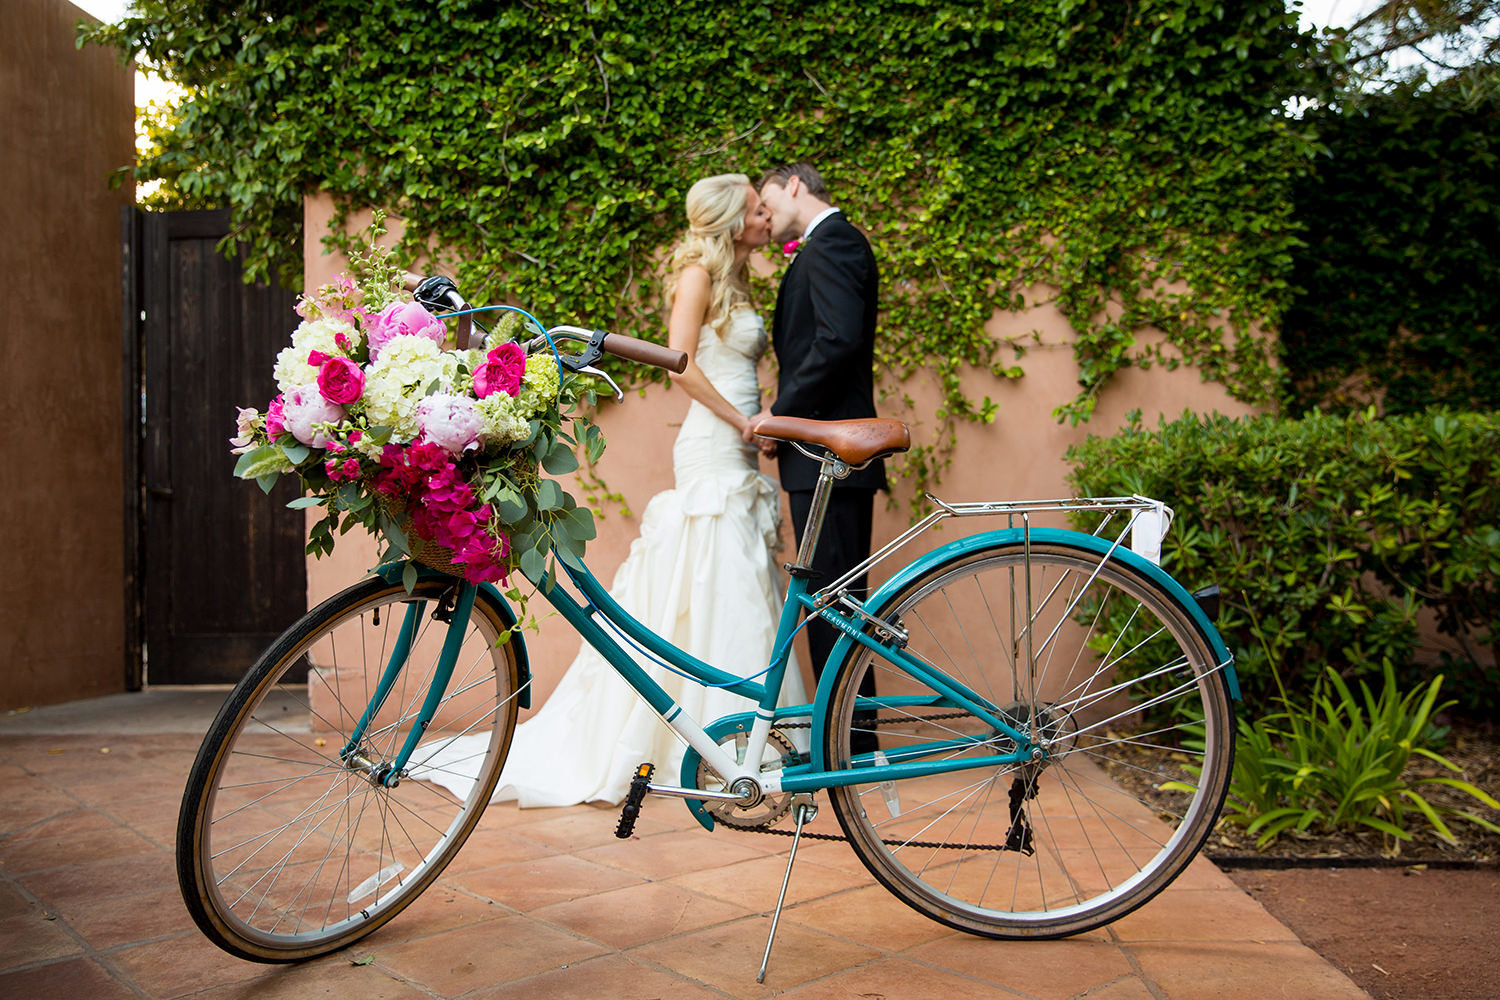 Top 10 wedding portraits with bikes